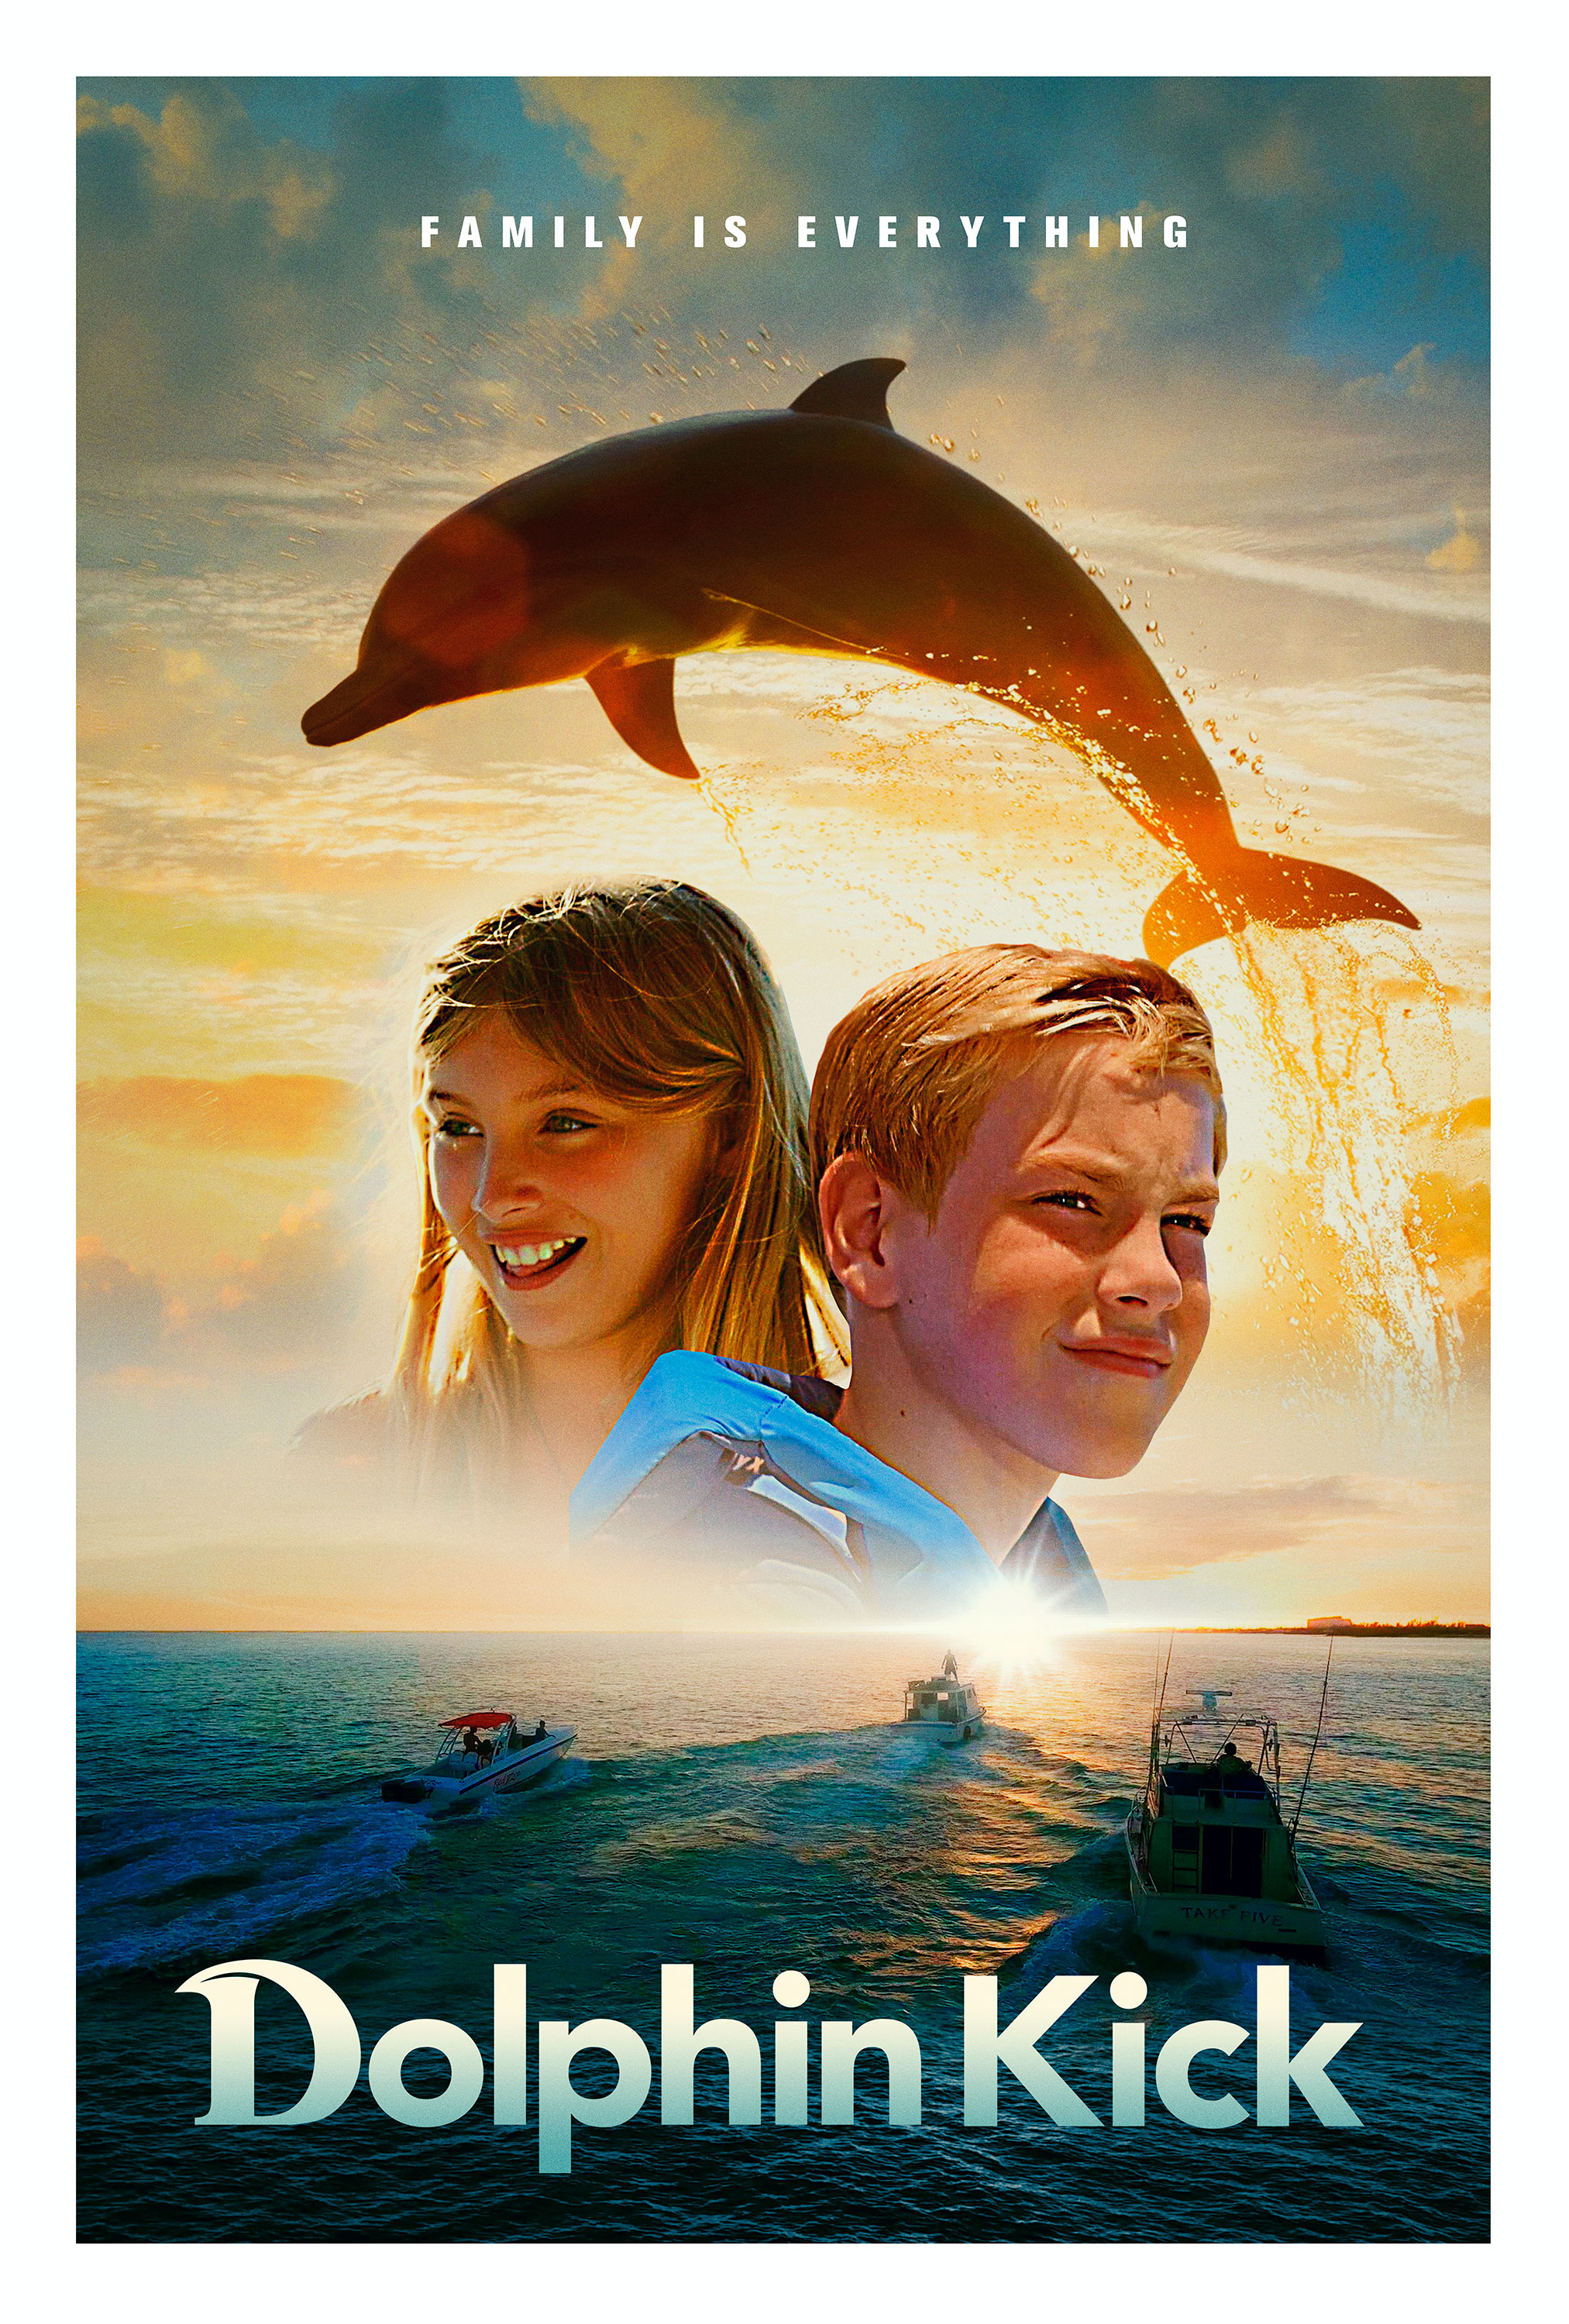 Nonton film Dolphin Kick layarkaca21 indoxx1 ganool online streaming terbaru